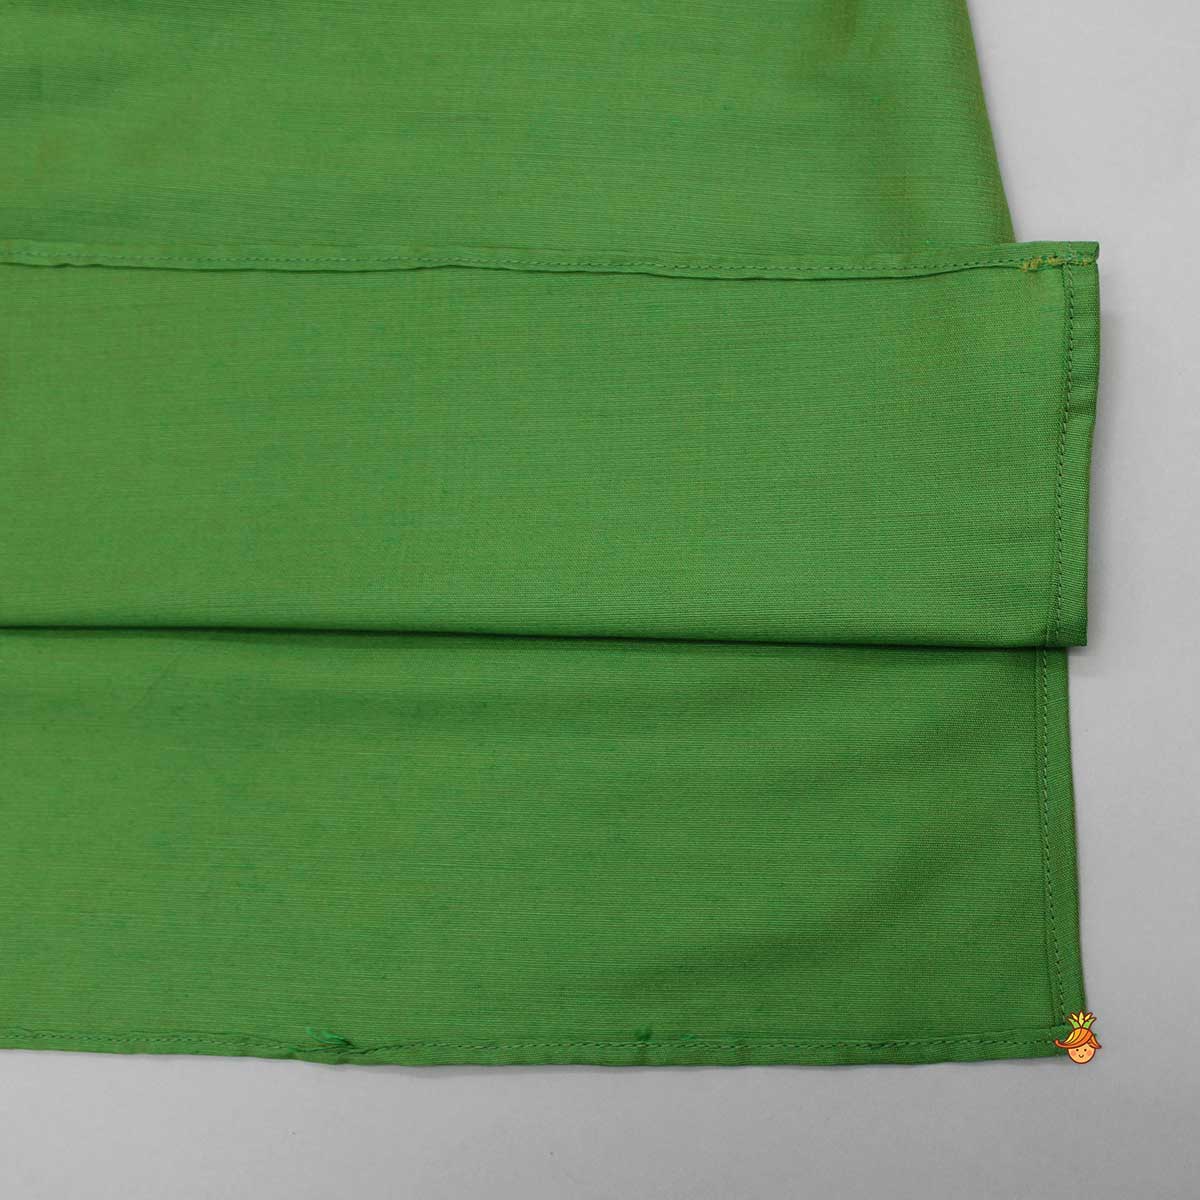 Green Kurta With Tree-Printed Jacket And Pyjama